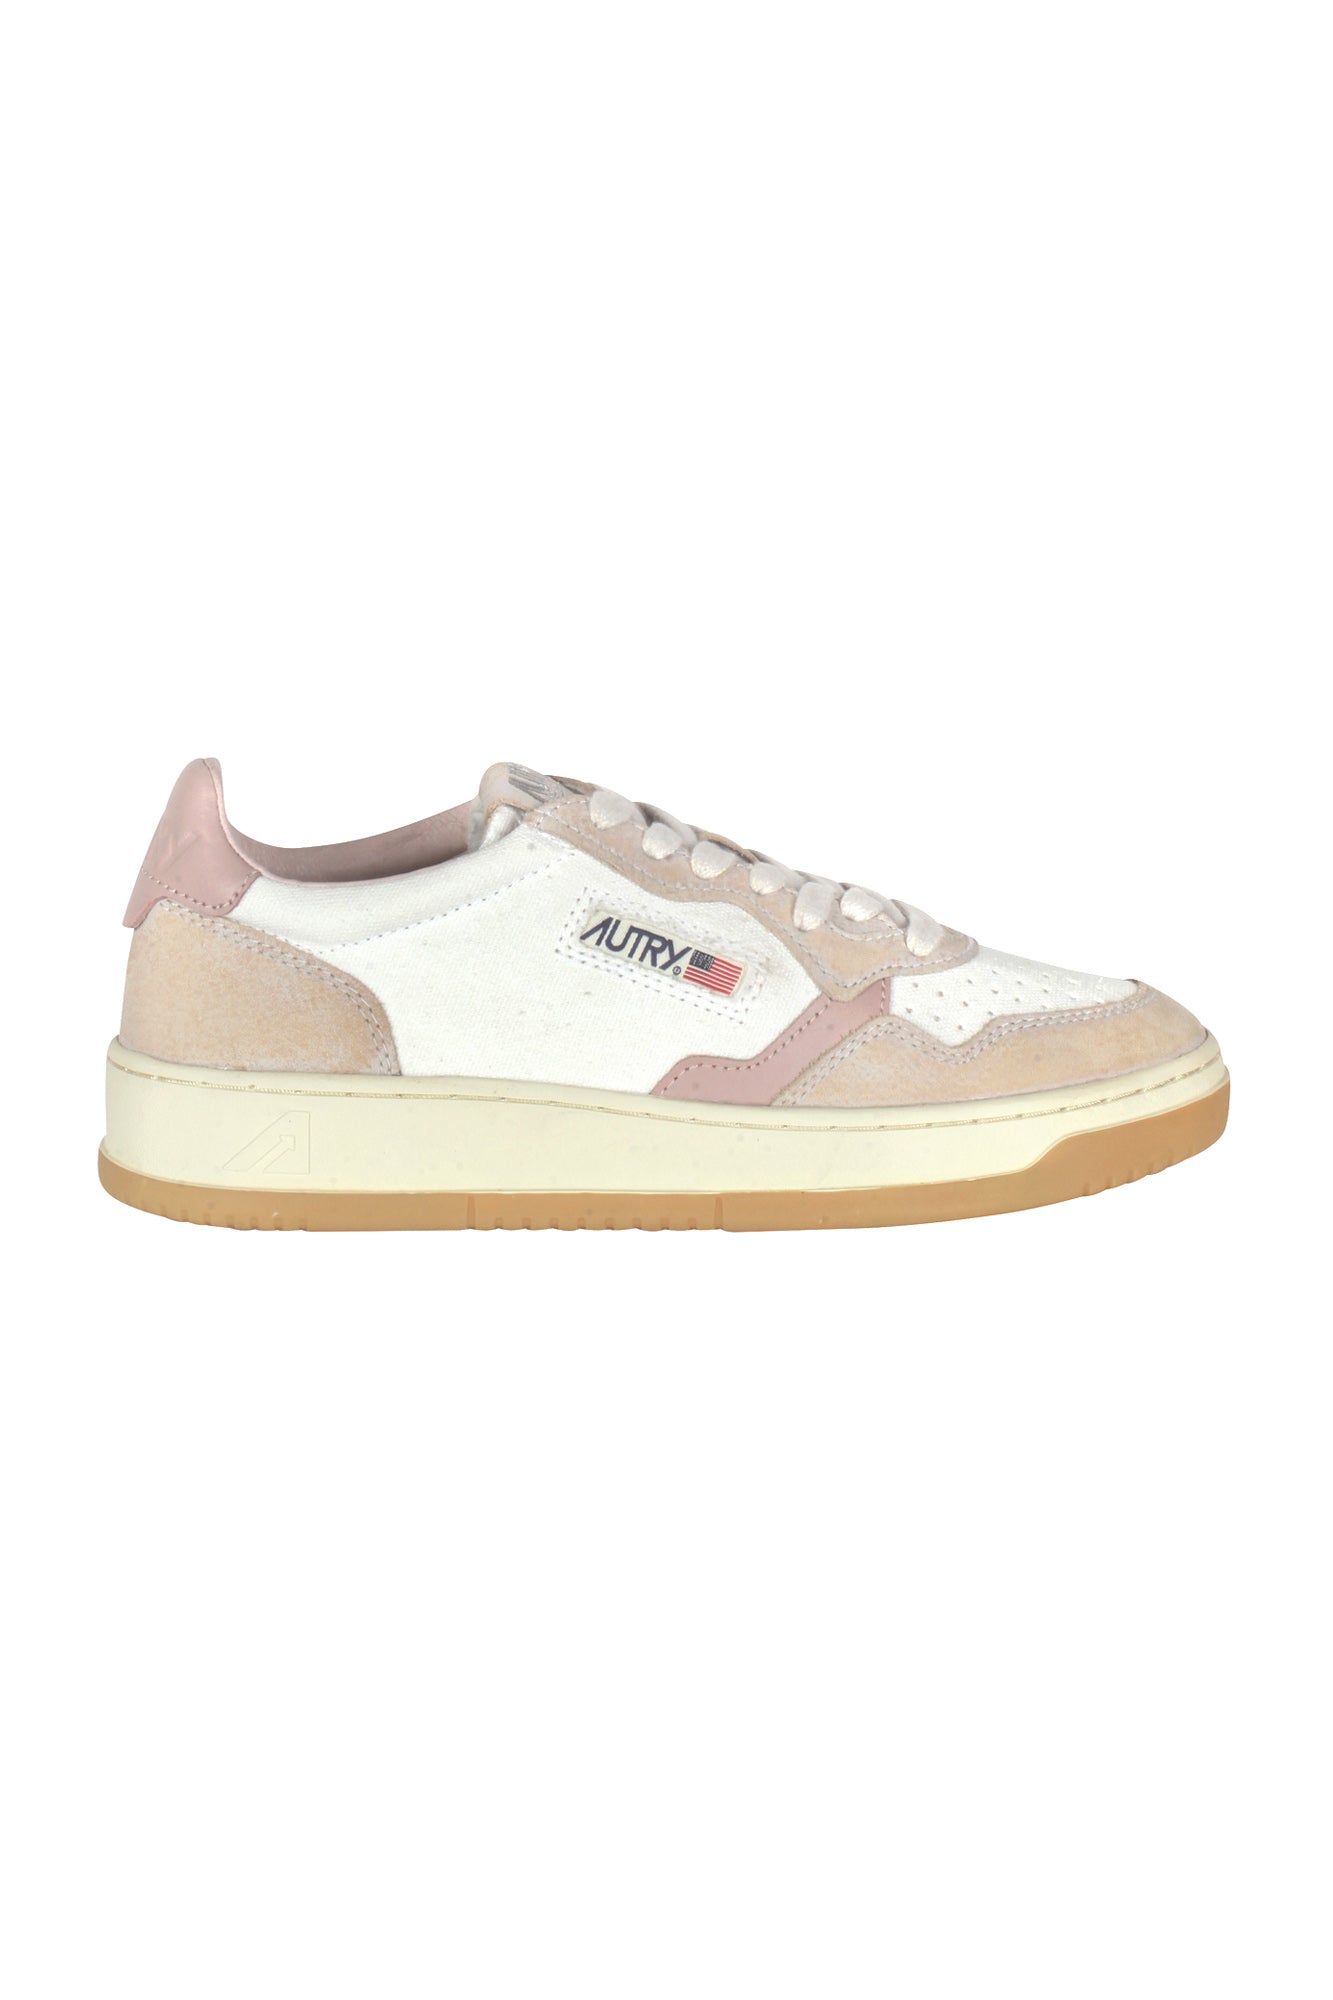 Autry - Sneakers - 430018 - Beige/Rosa